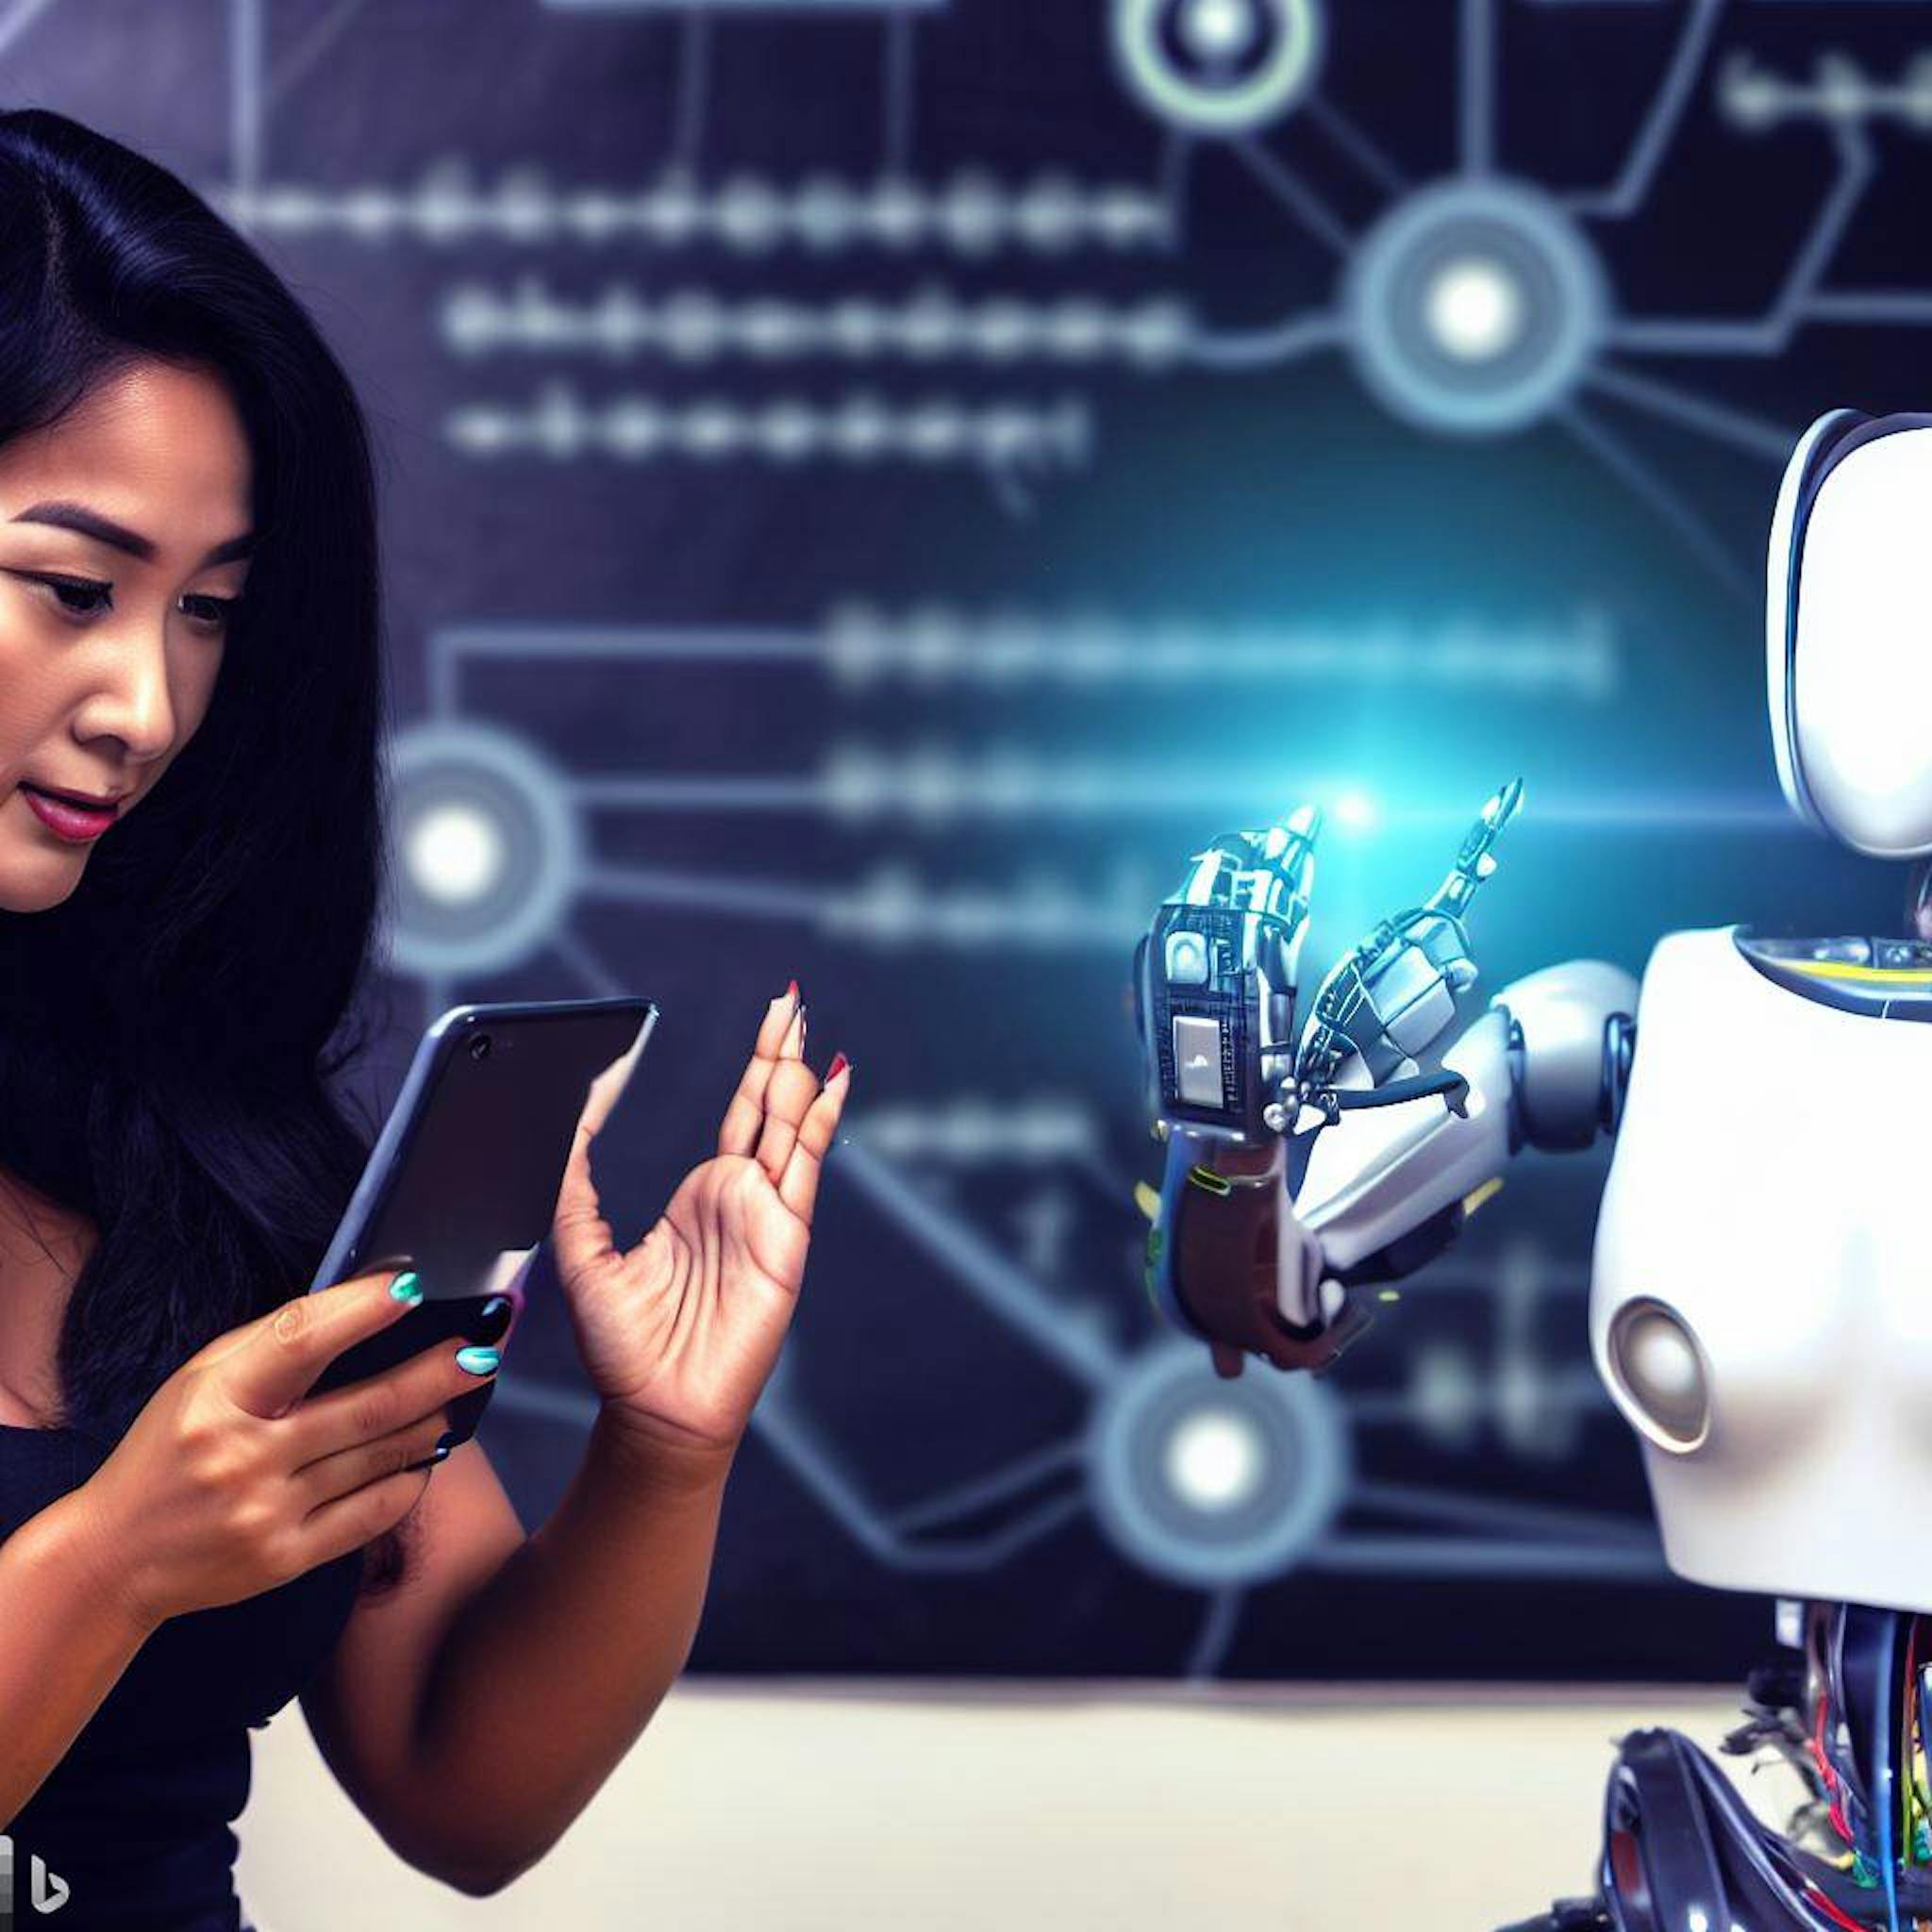 Android Robot Learning Human Skills